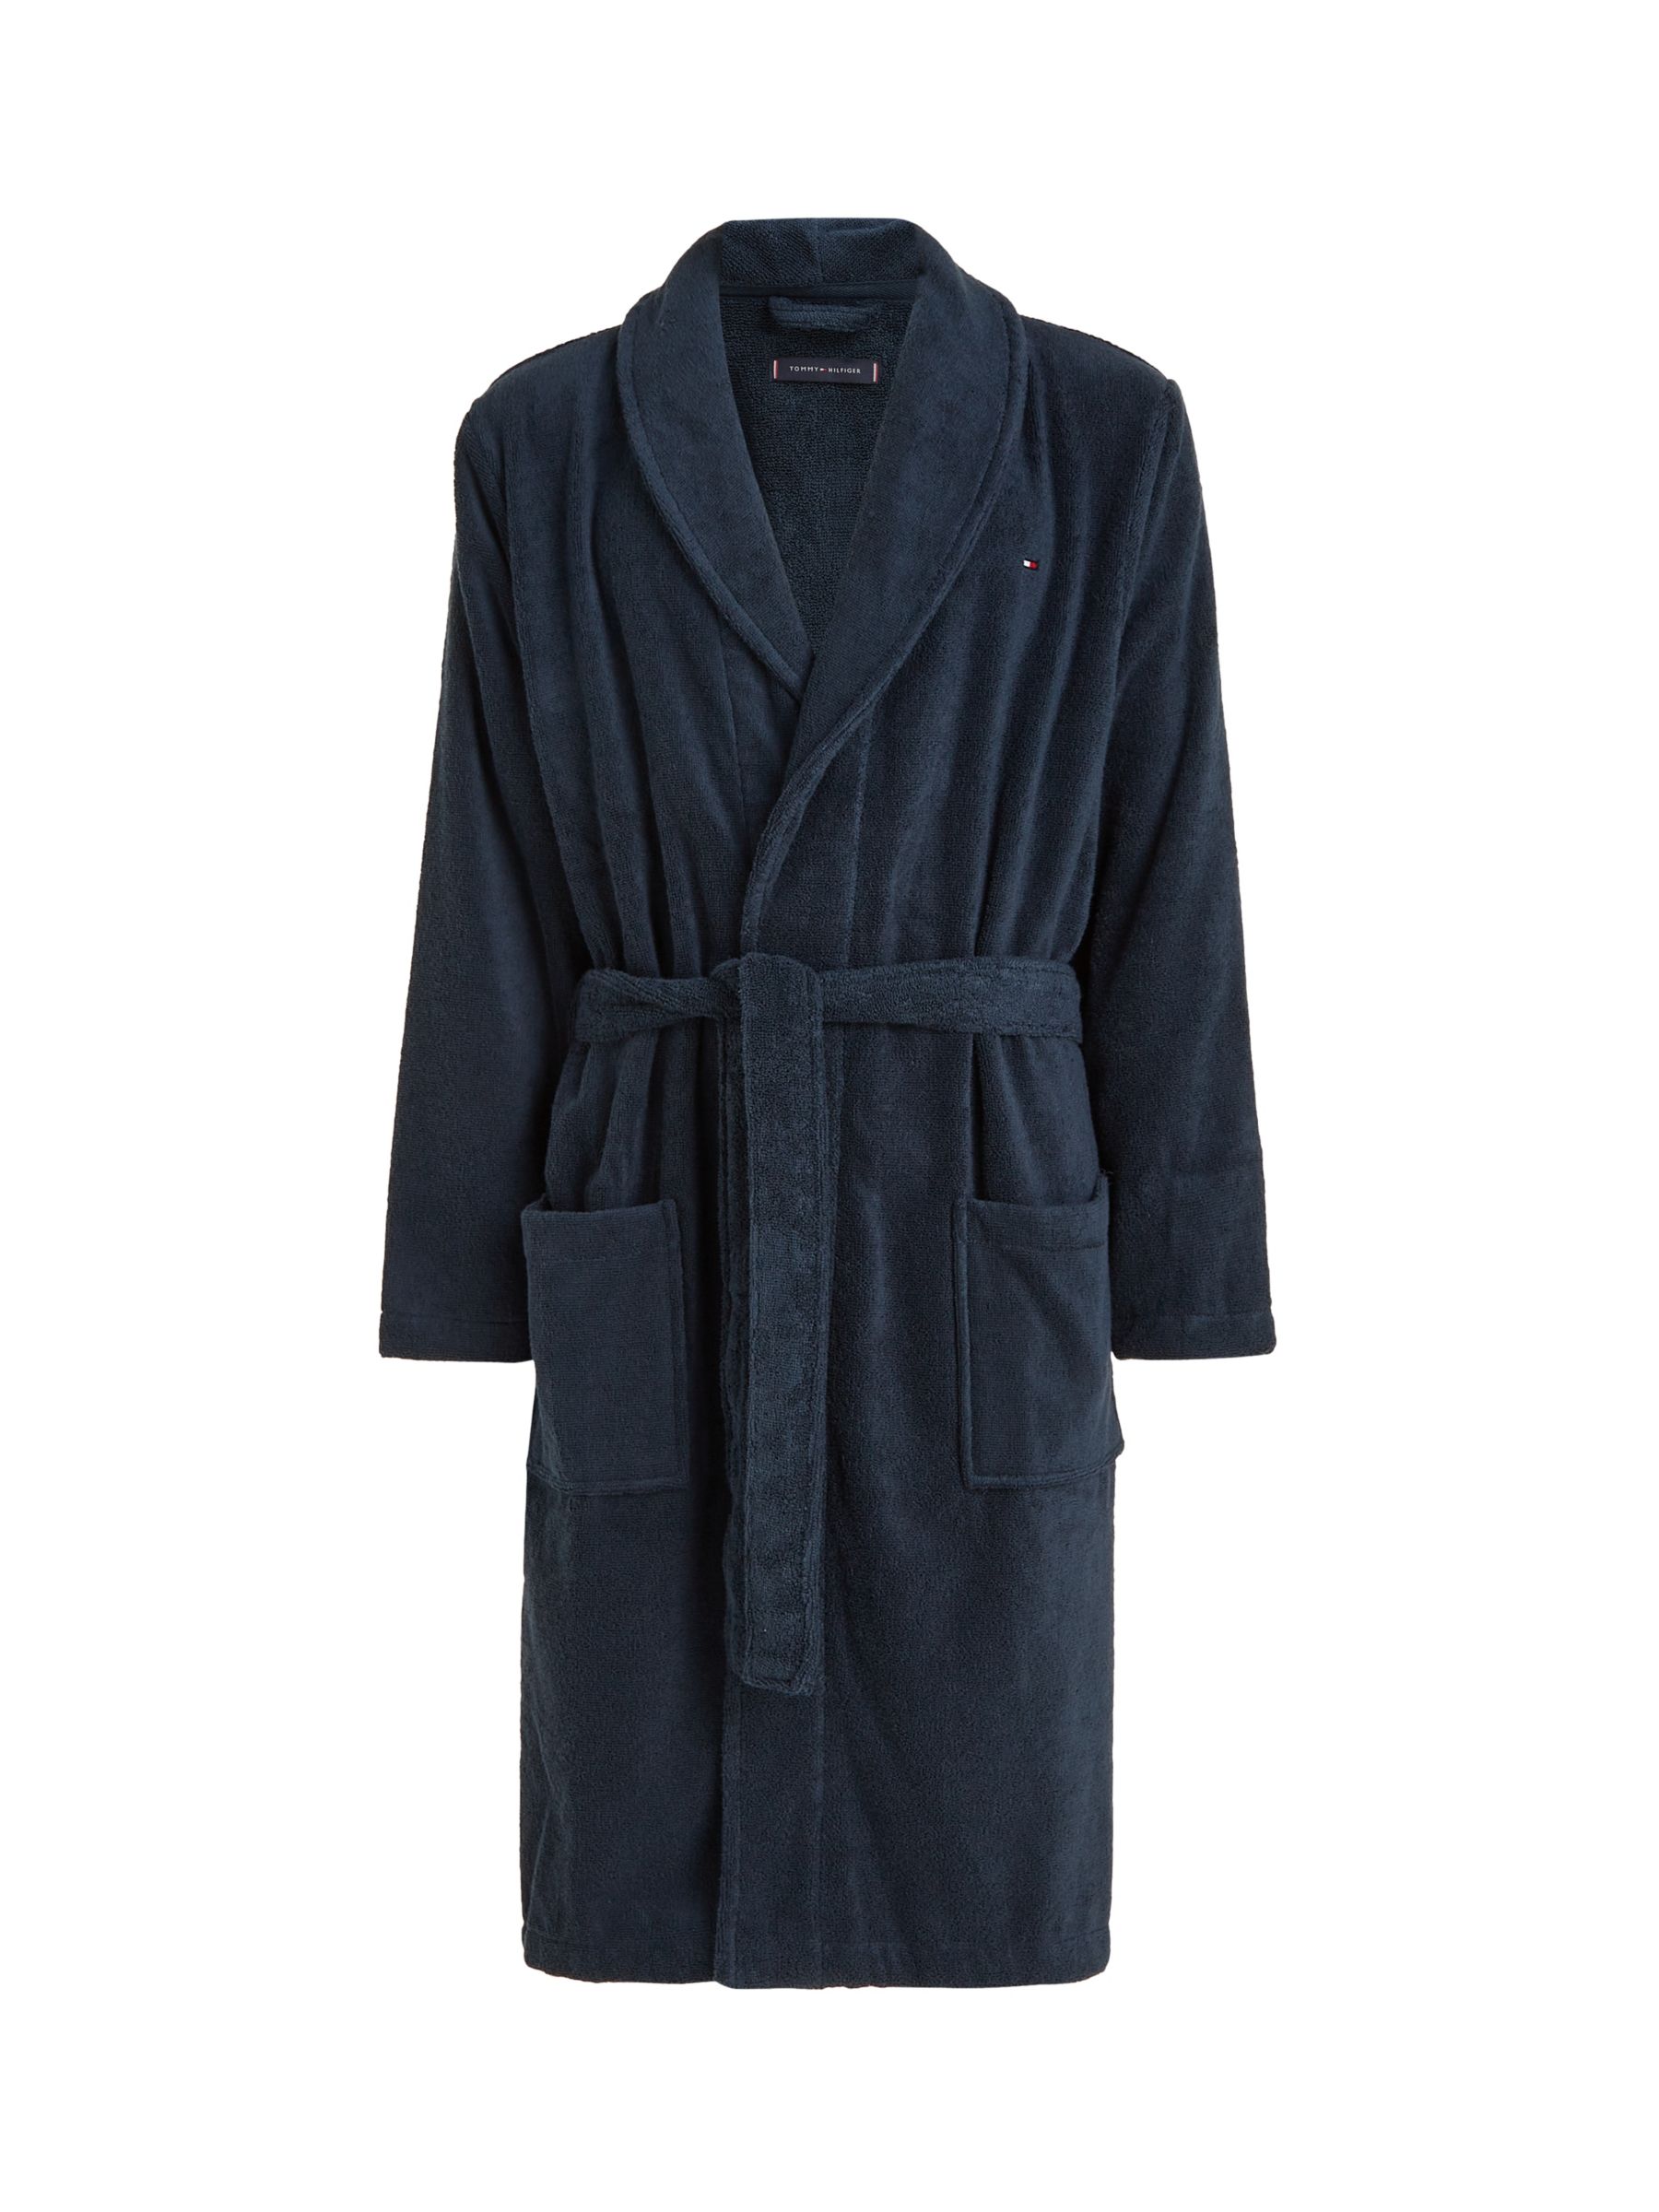 Tommy Hilfiger Pure Cotton Towelling Robe, Navy Blazer, XS